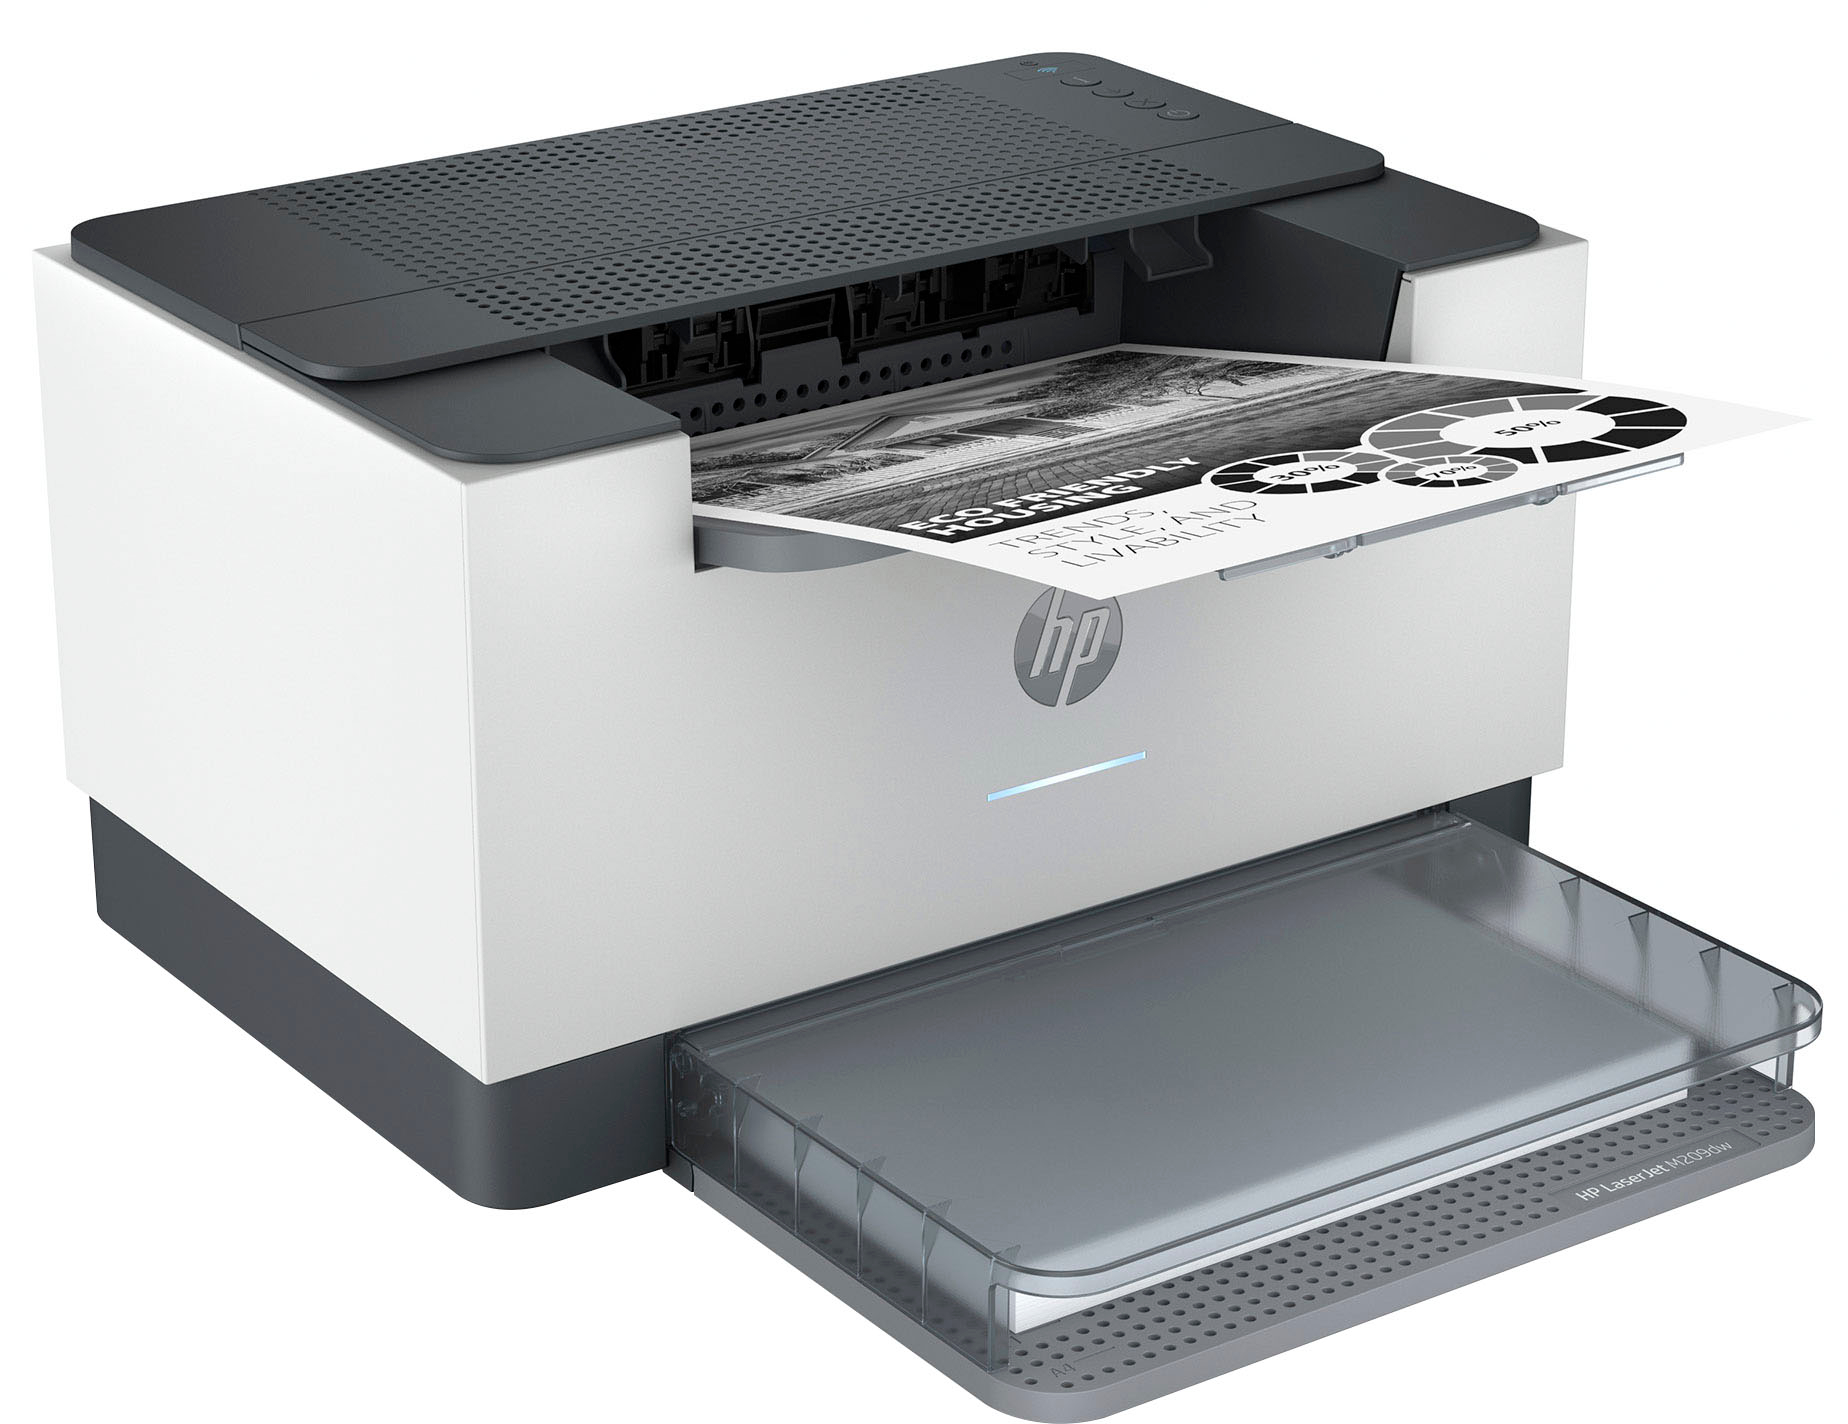 Angle View: HP - LaserJet M209dw Wireless Black-and-White Laser Printer - White & Slate